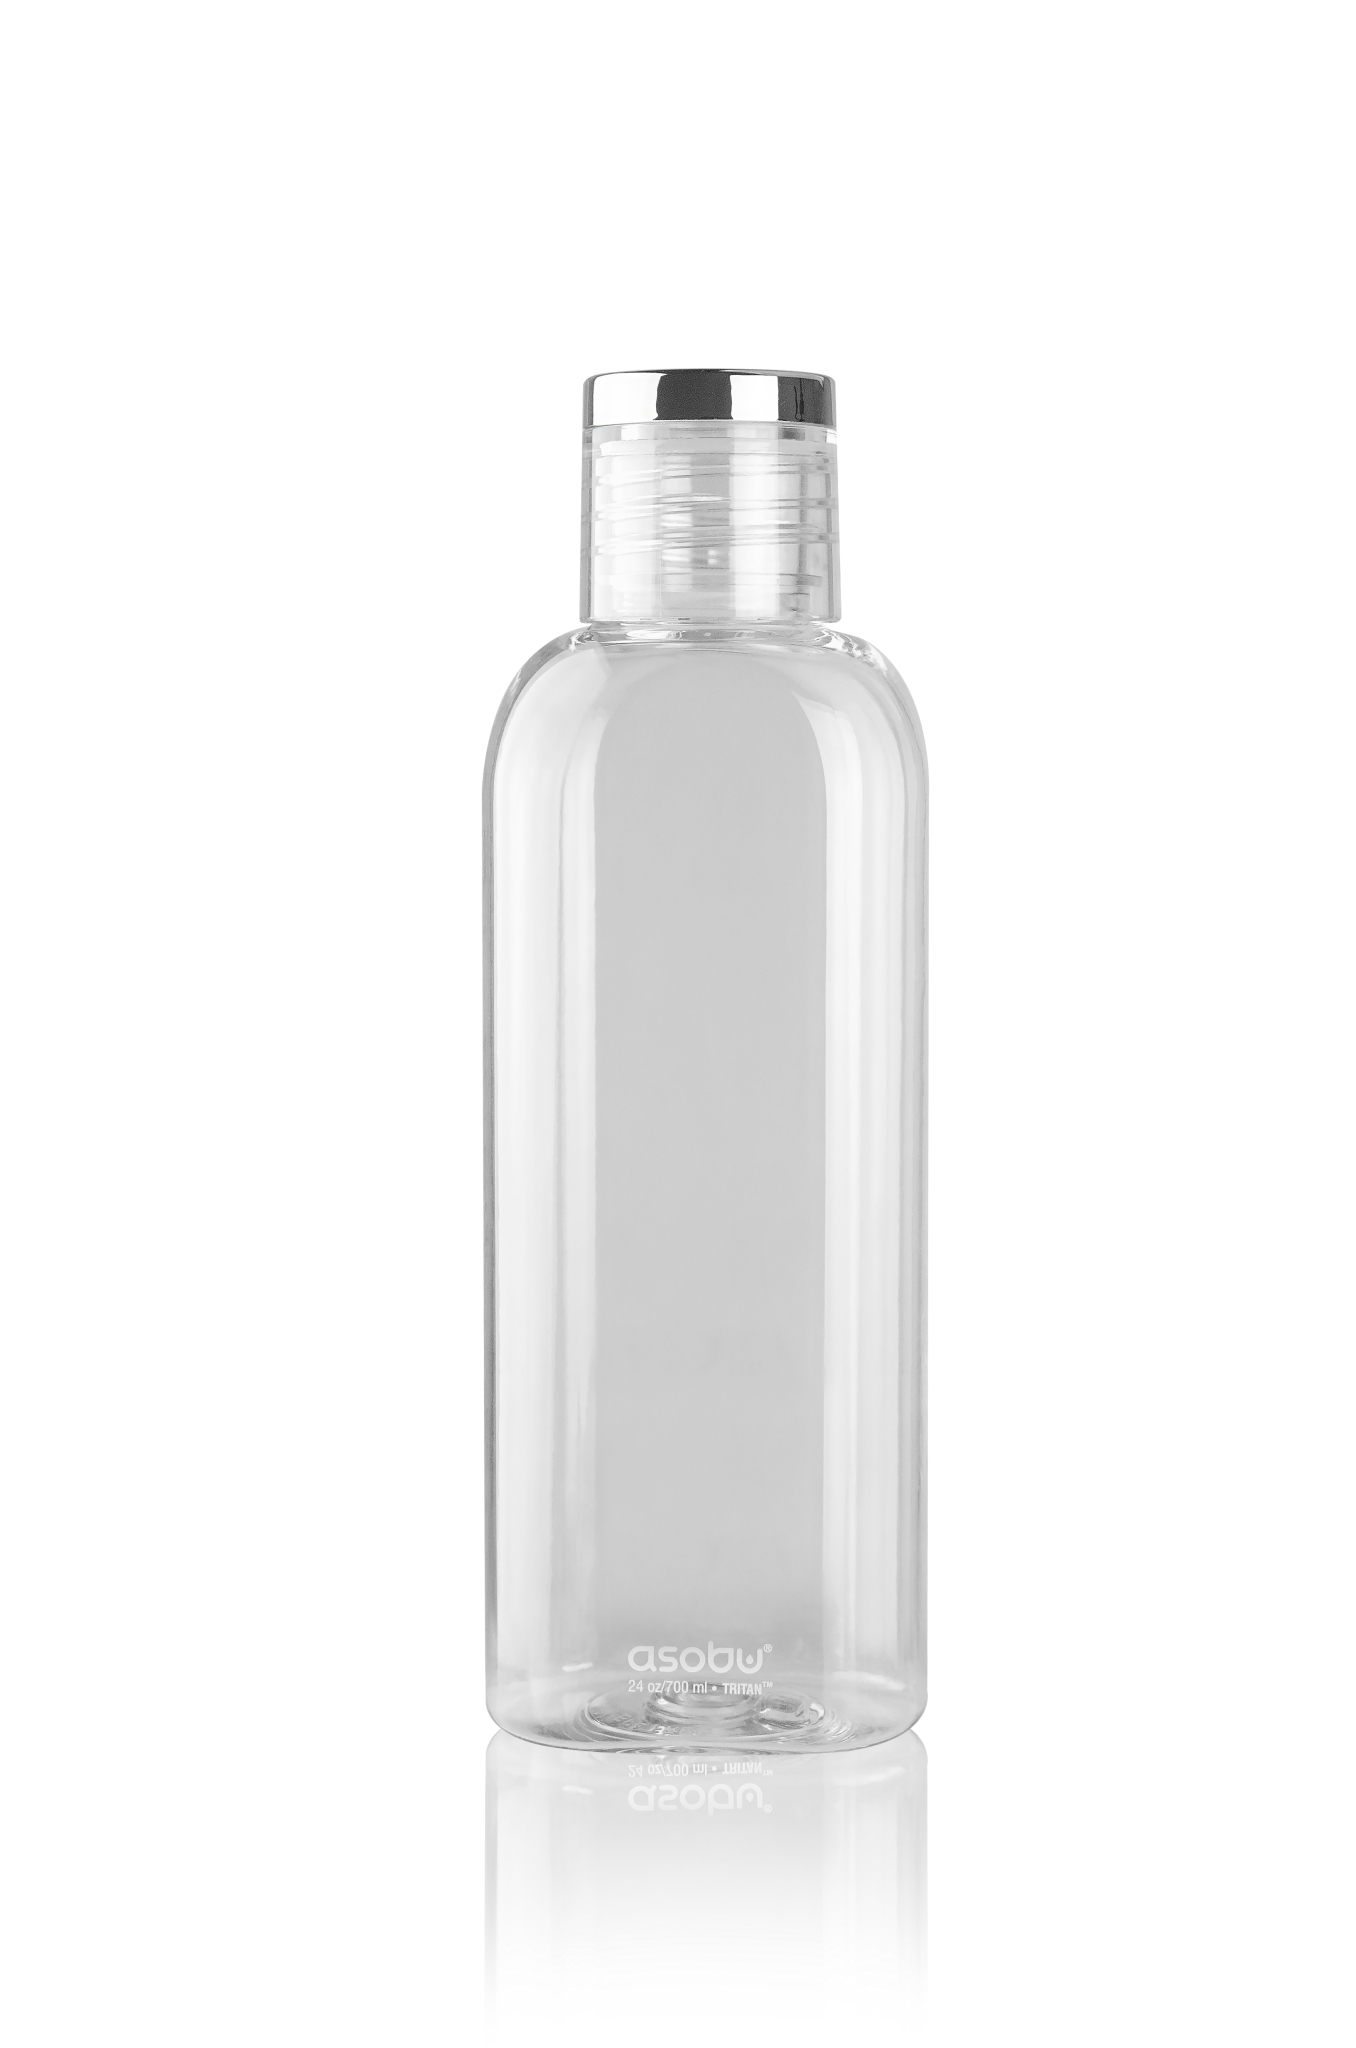 Бутылка FLIP SIDE, 700 мл, прозрачная, прозрачный, пластик